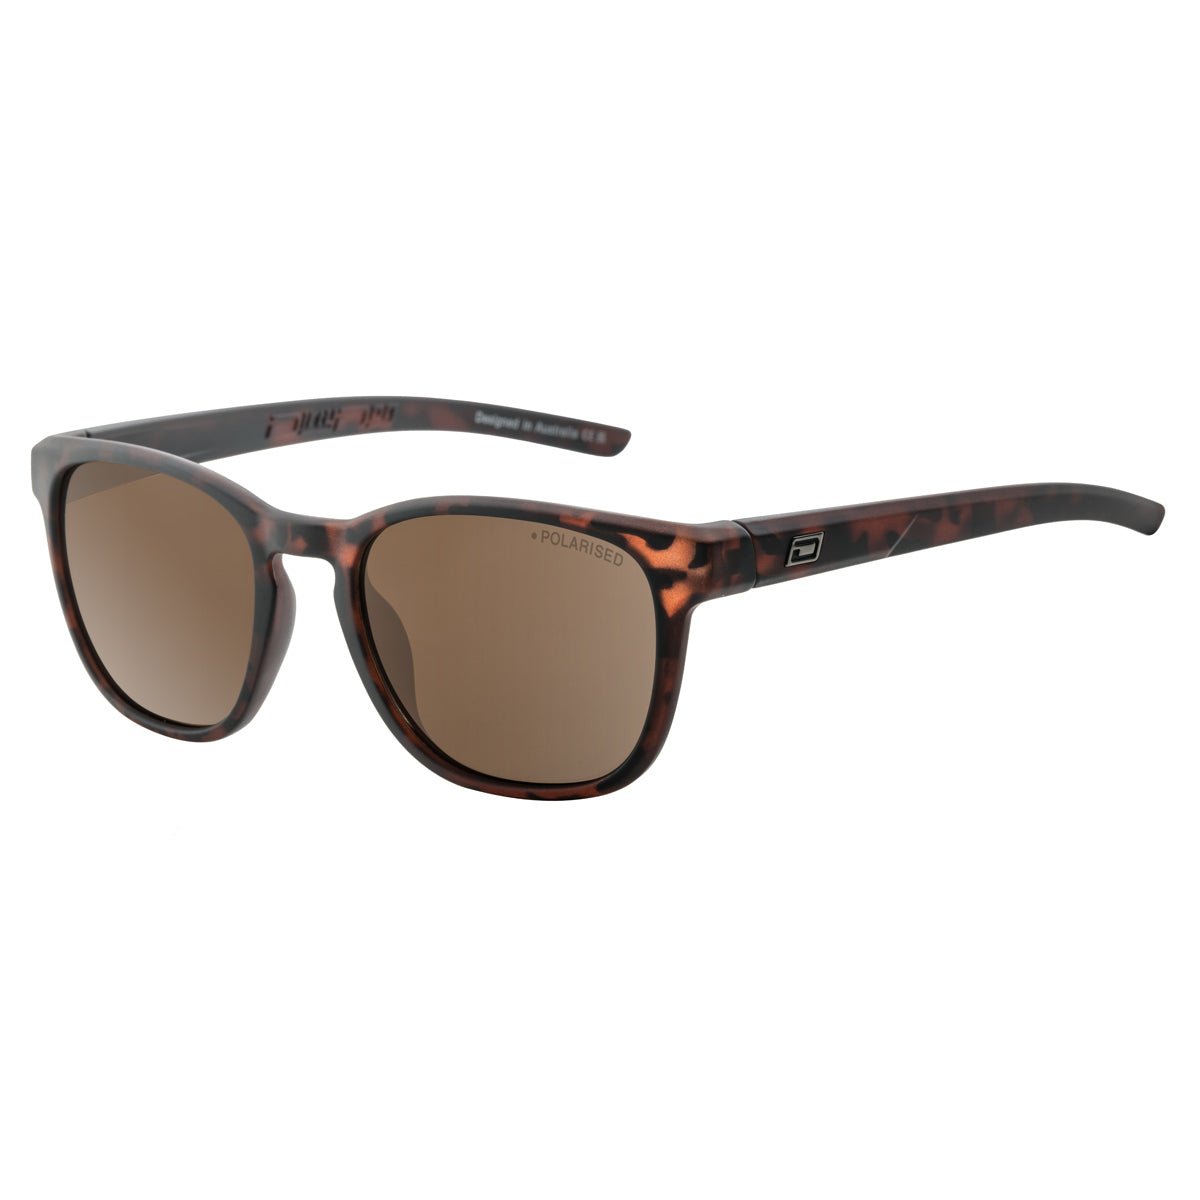 Dirty Dog Lit Sunglasses - Worthing Watersports - 53757 - Sunglasses - Dirty Dog